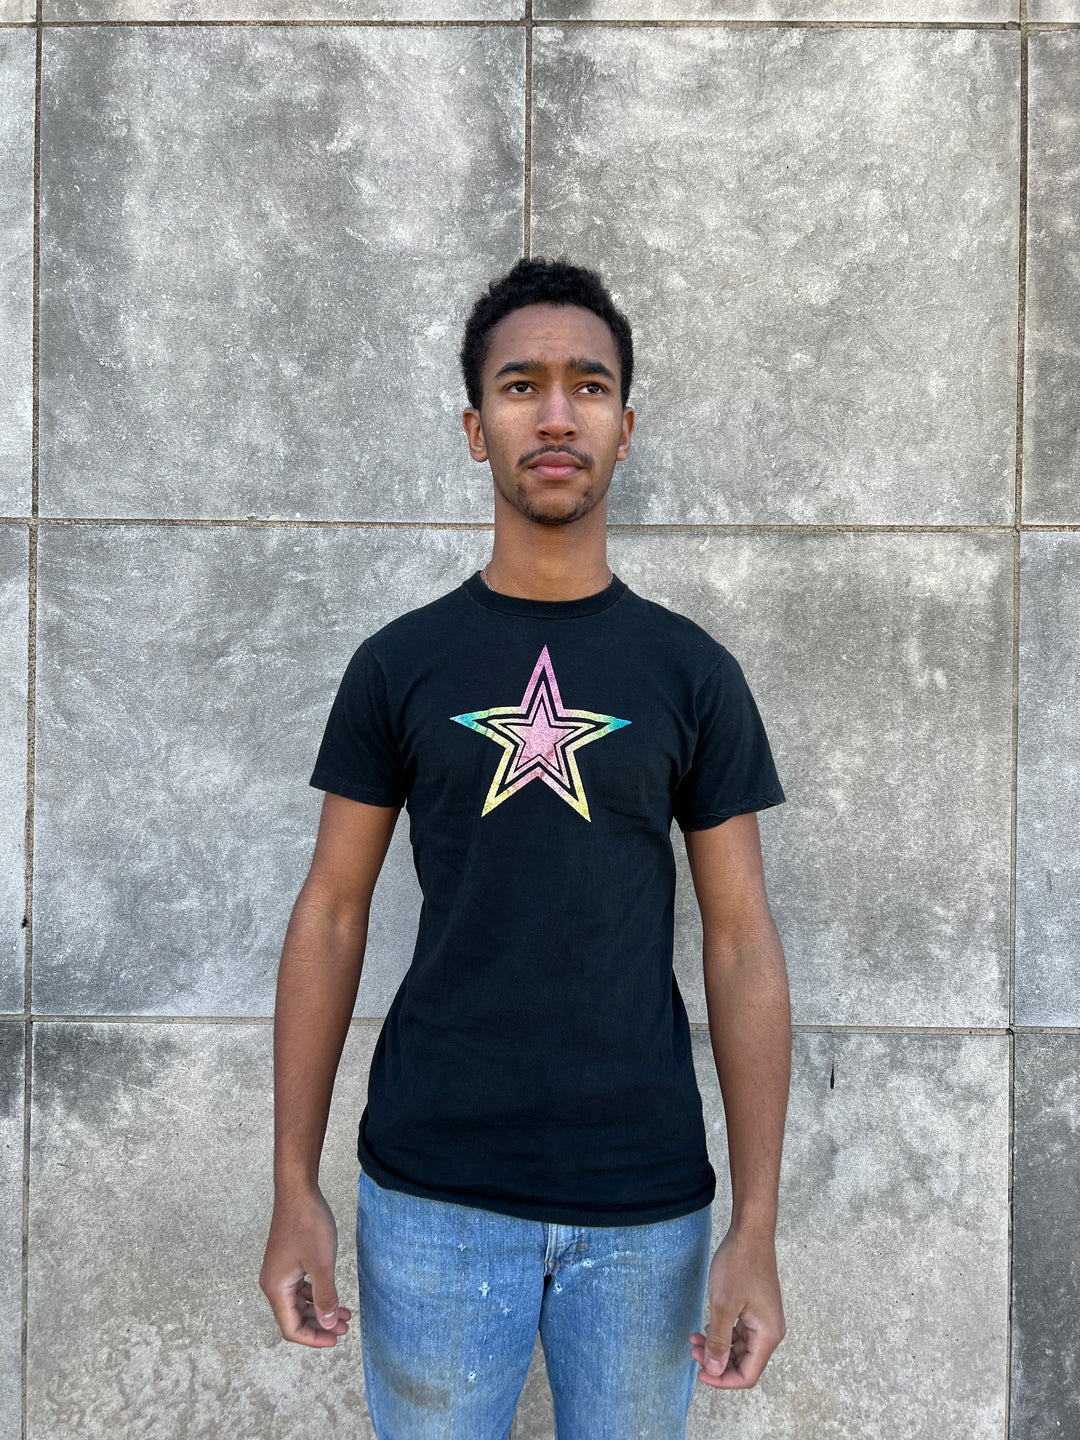 70s Black Cotton T-shirt Single Stitch with Iron-On Glitter Star